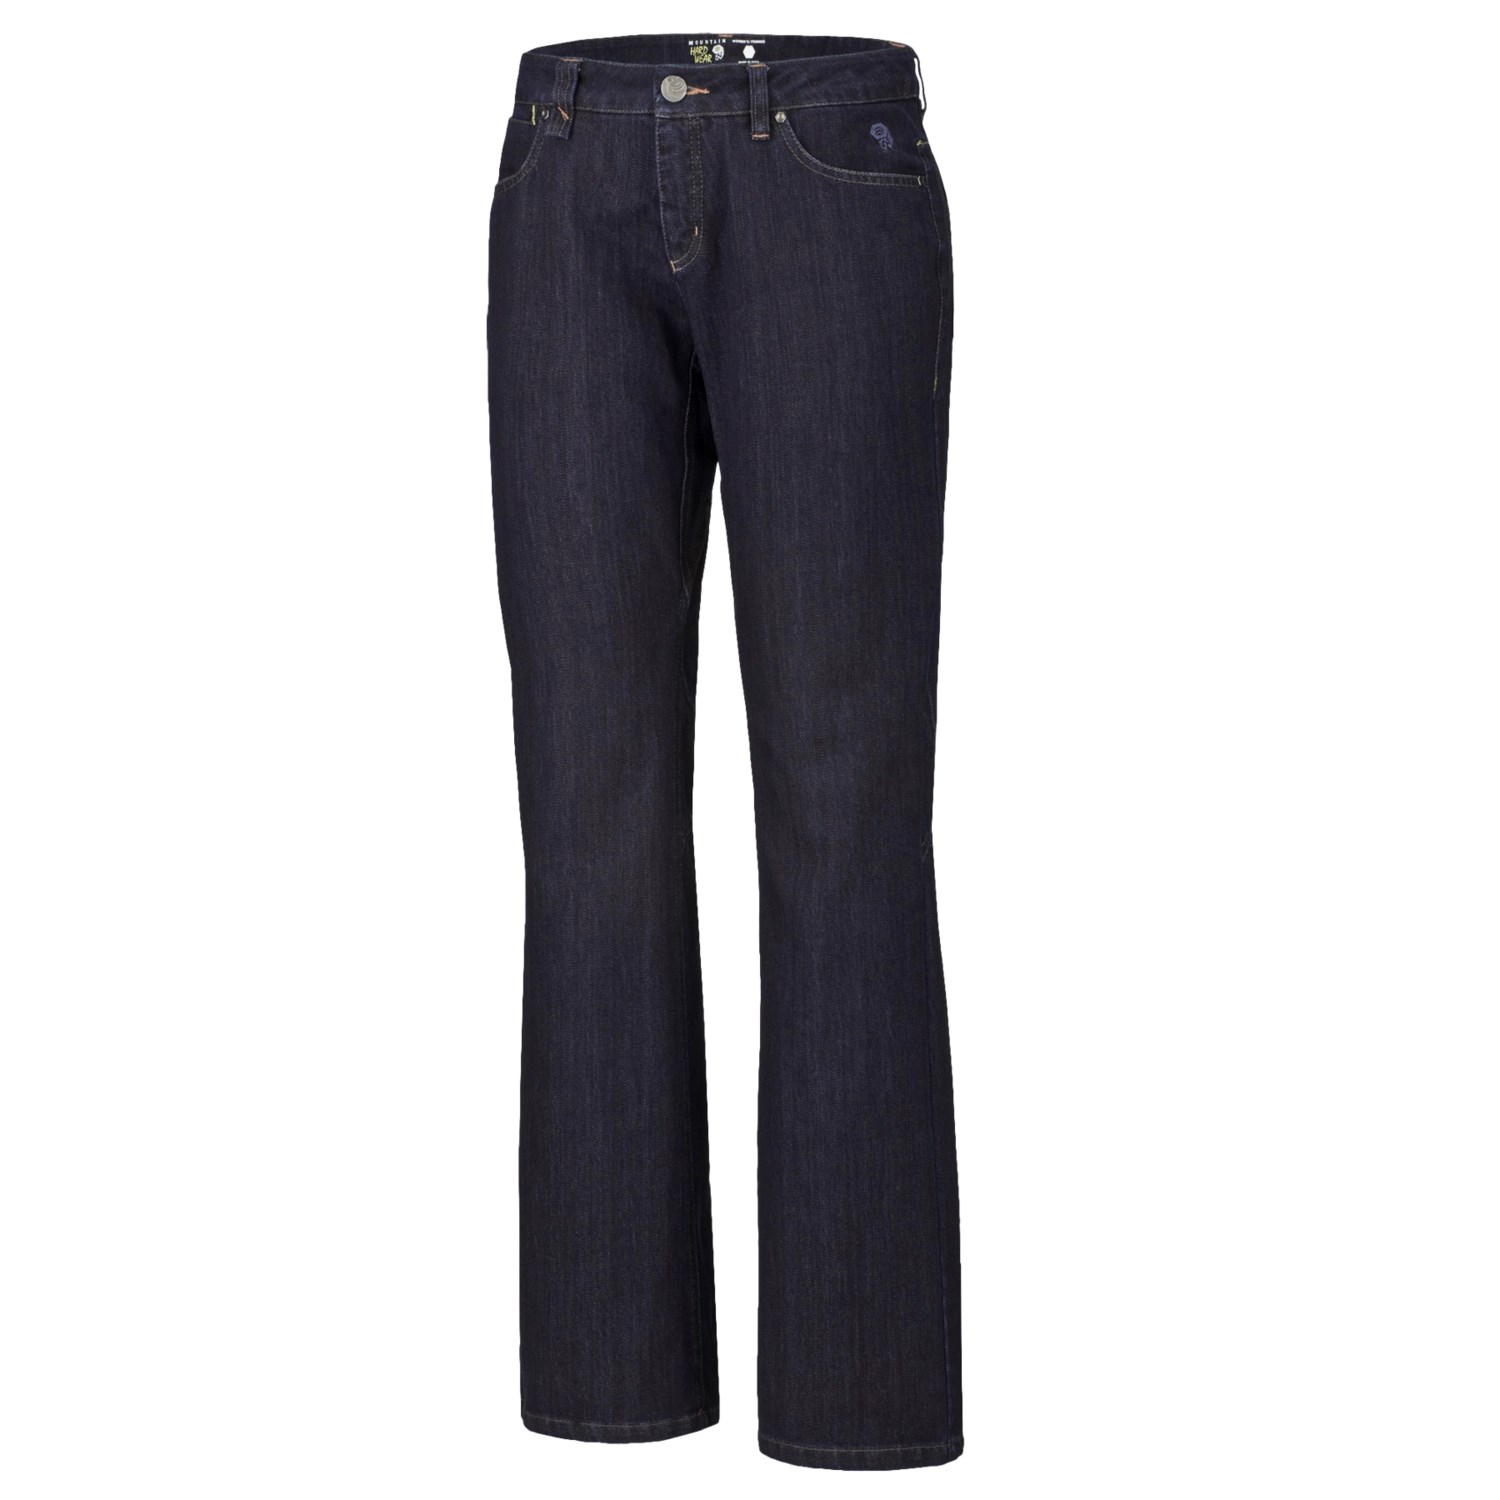 Mountain Hardwear Wagner Gene Jeans - Organic Cotton, Recycled ...